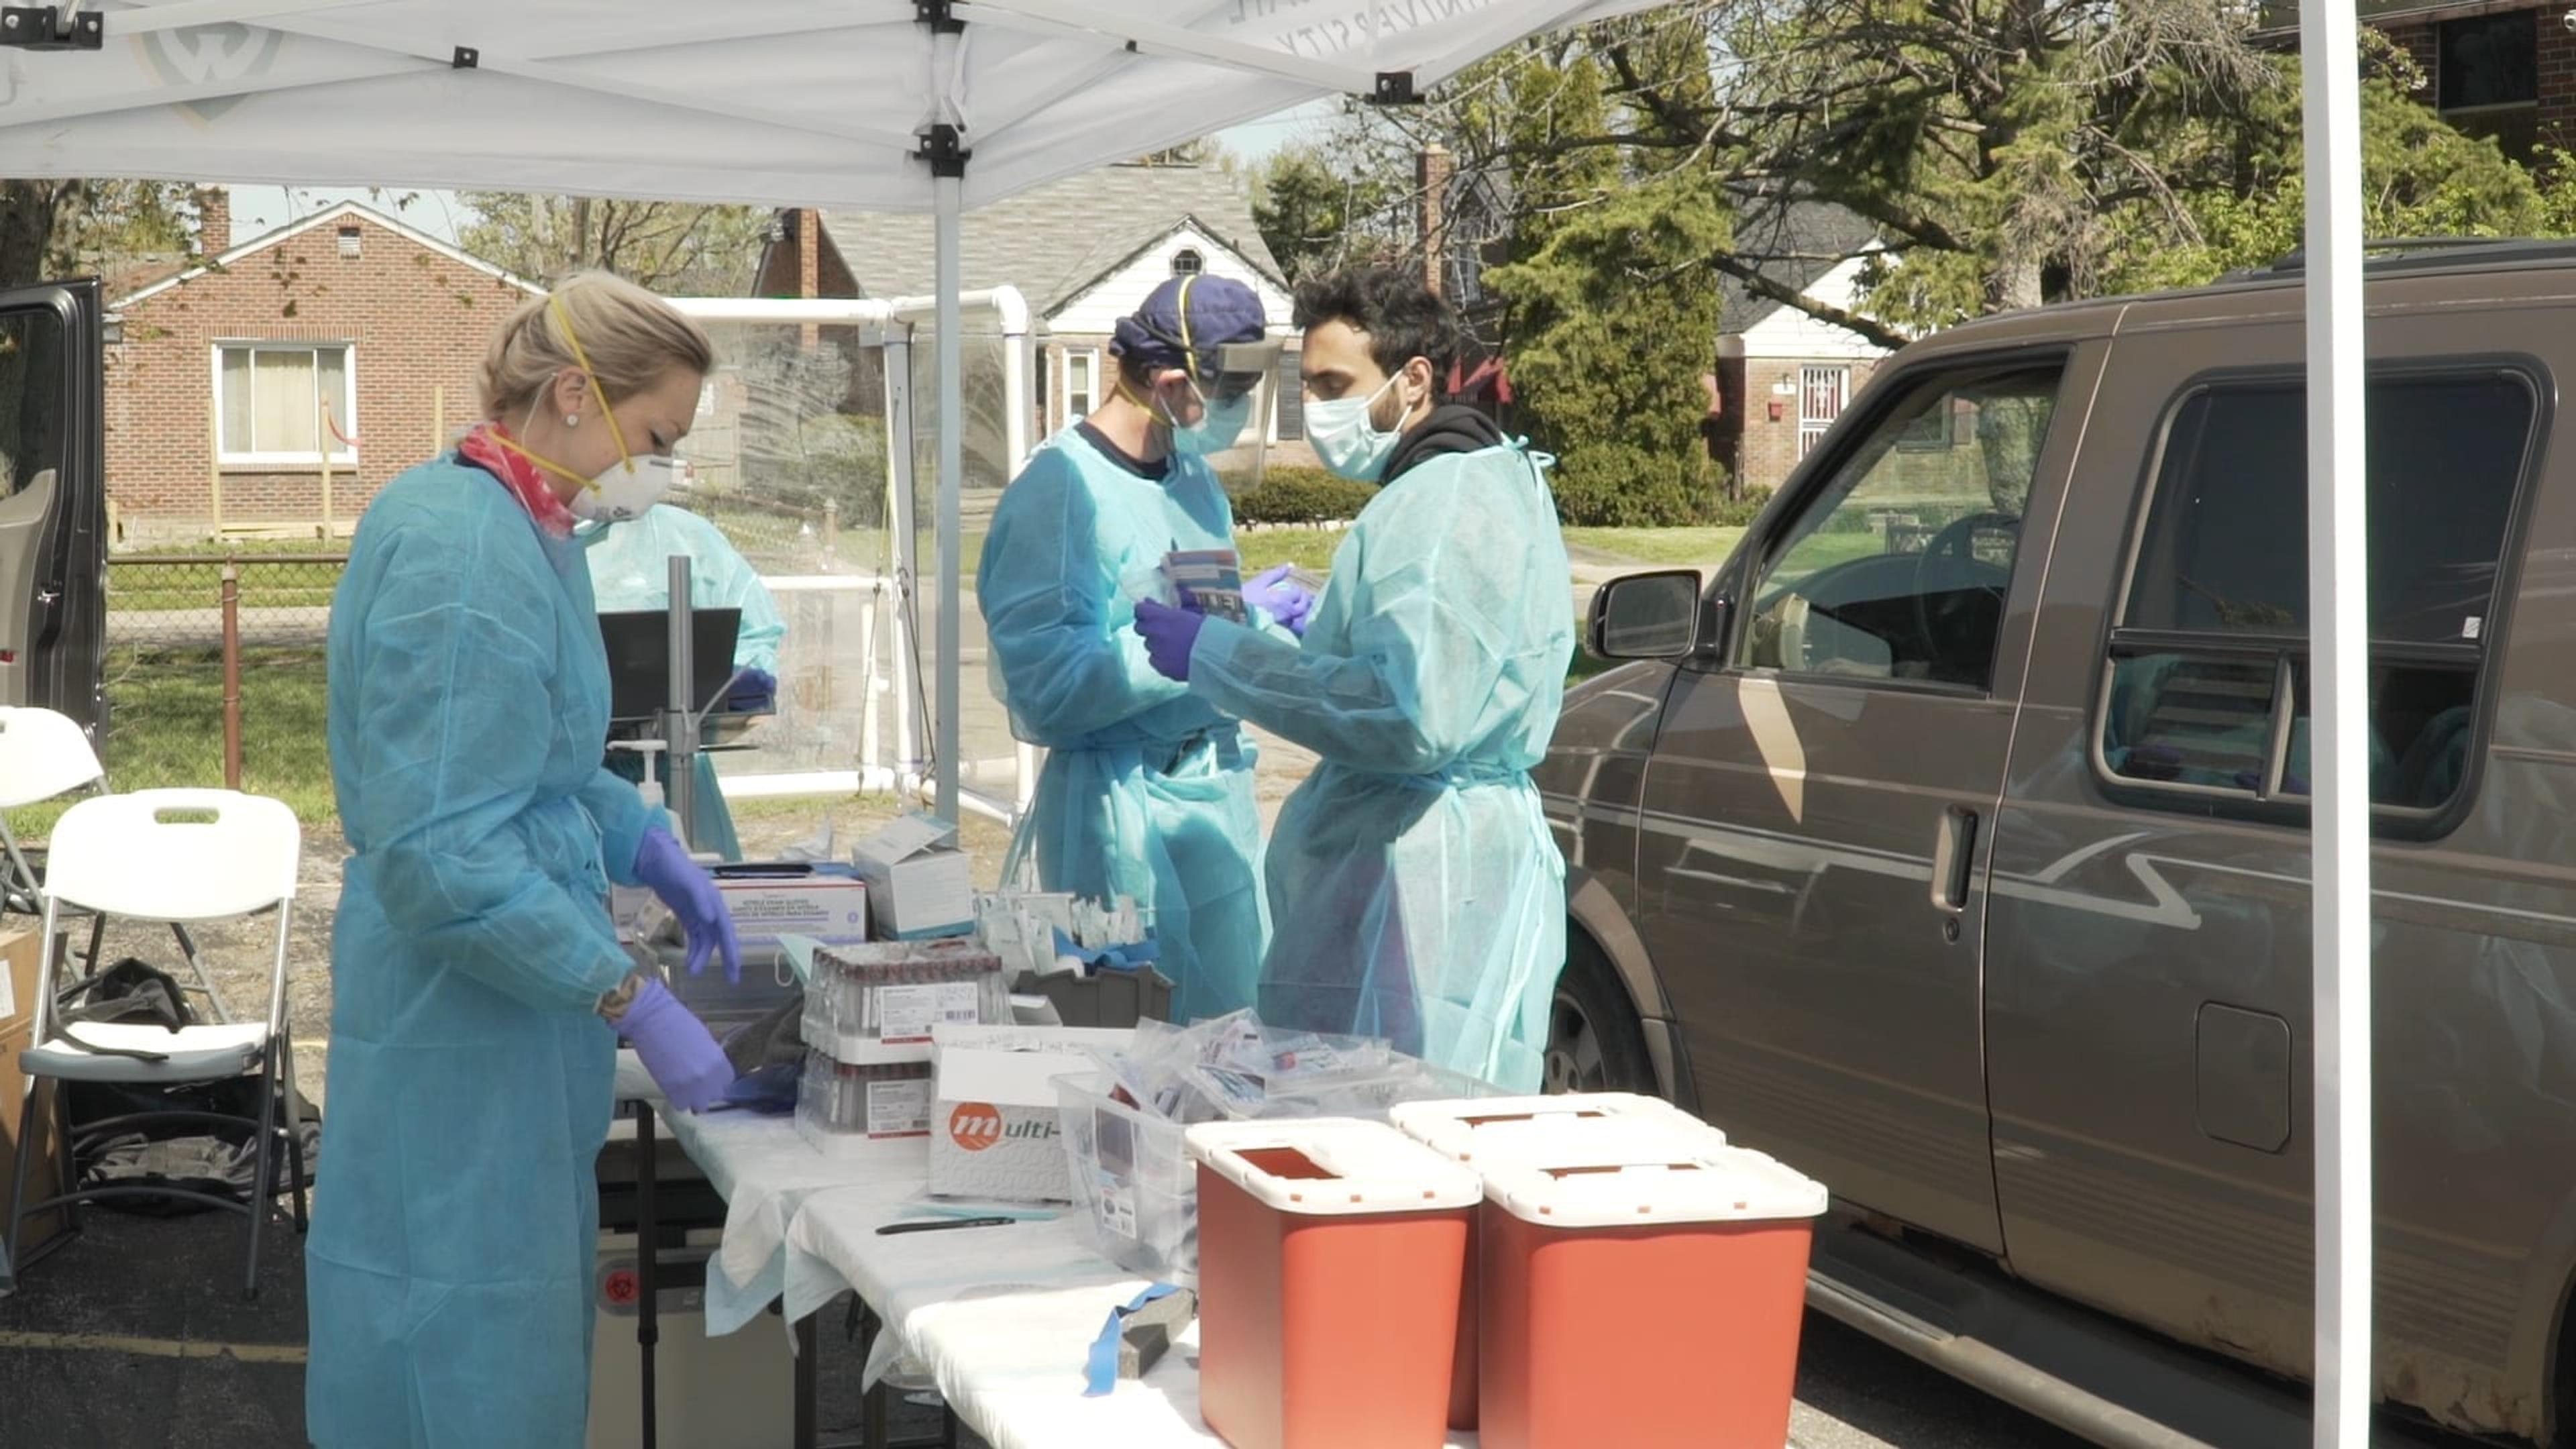 Medical workers prepare coronavirus tests